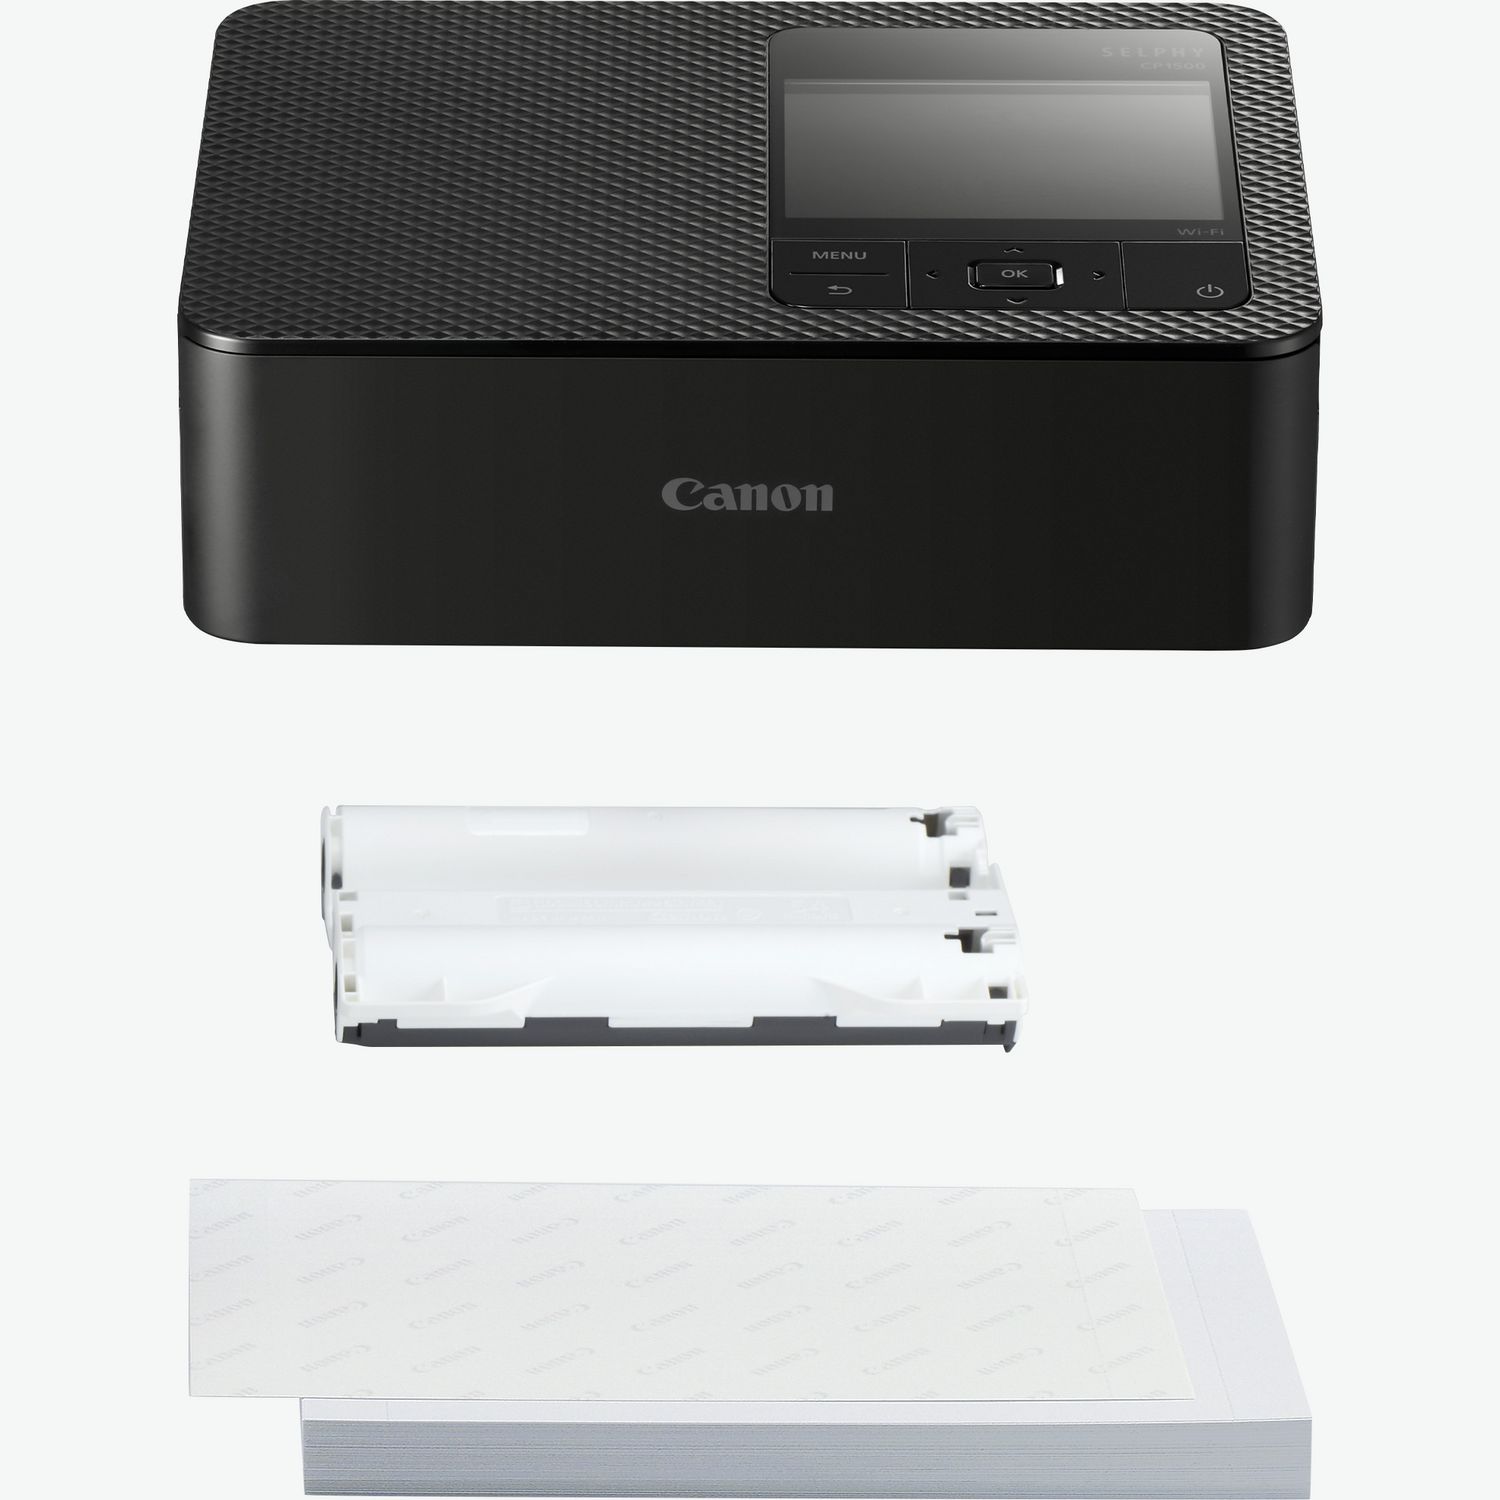 Comprar Cámara impresora fotográfica en color instantánea Canon Zoemini S2,  azul turquesa + Diario + Estuche en Interrumpido — Tienda Canon Espana